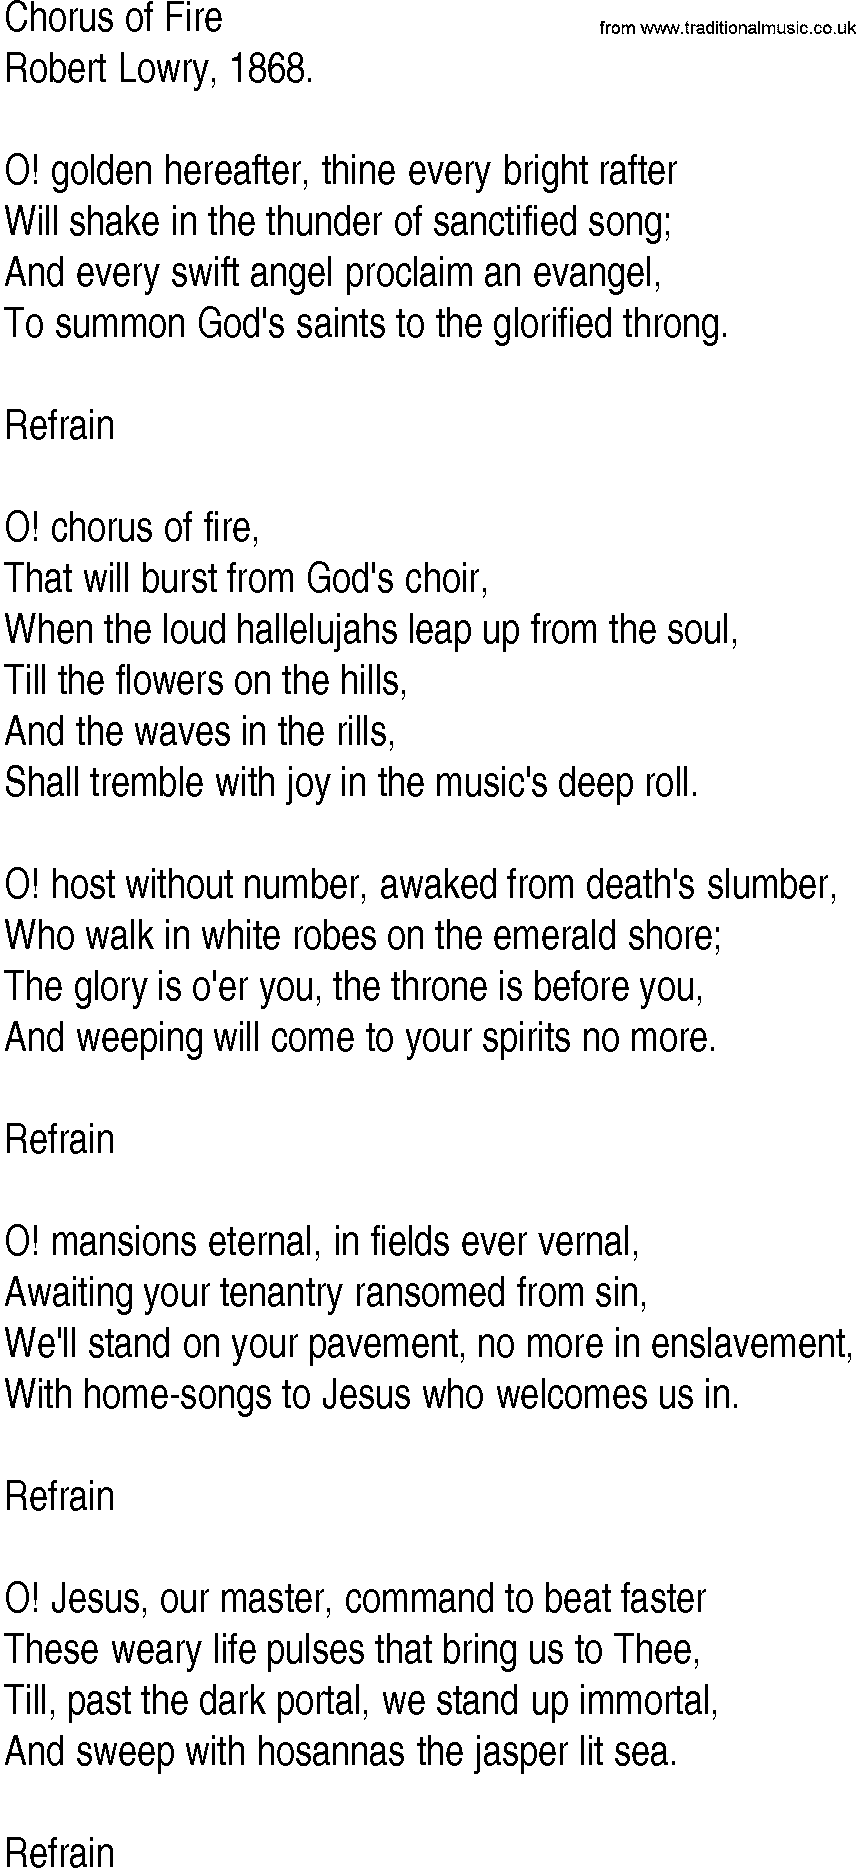 Hymn and Gospel Song: Chorus of Fire by Robert Lowry lyrics